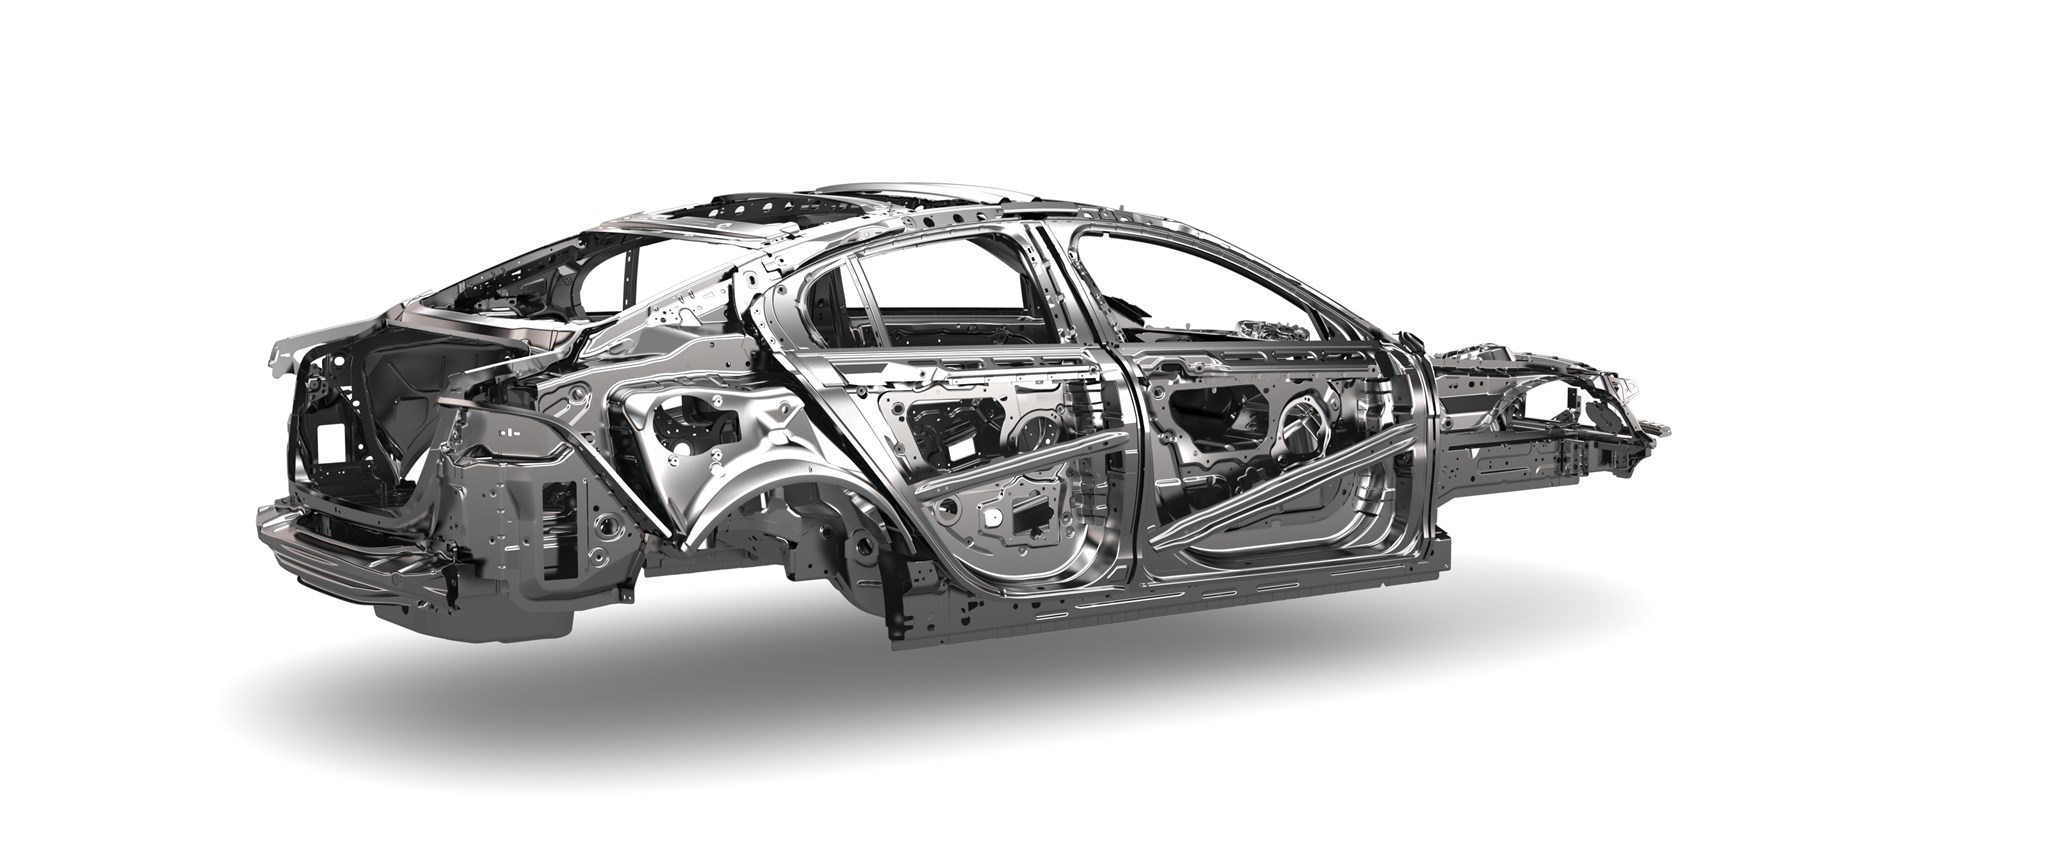 The mostly aluminium innards of the new 2015 Jaguar XE